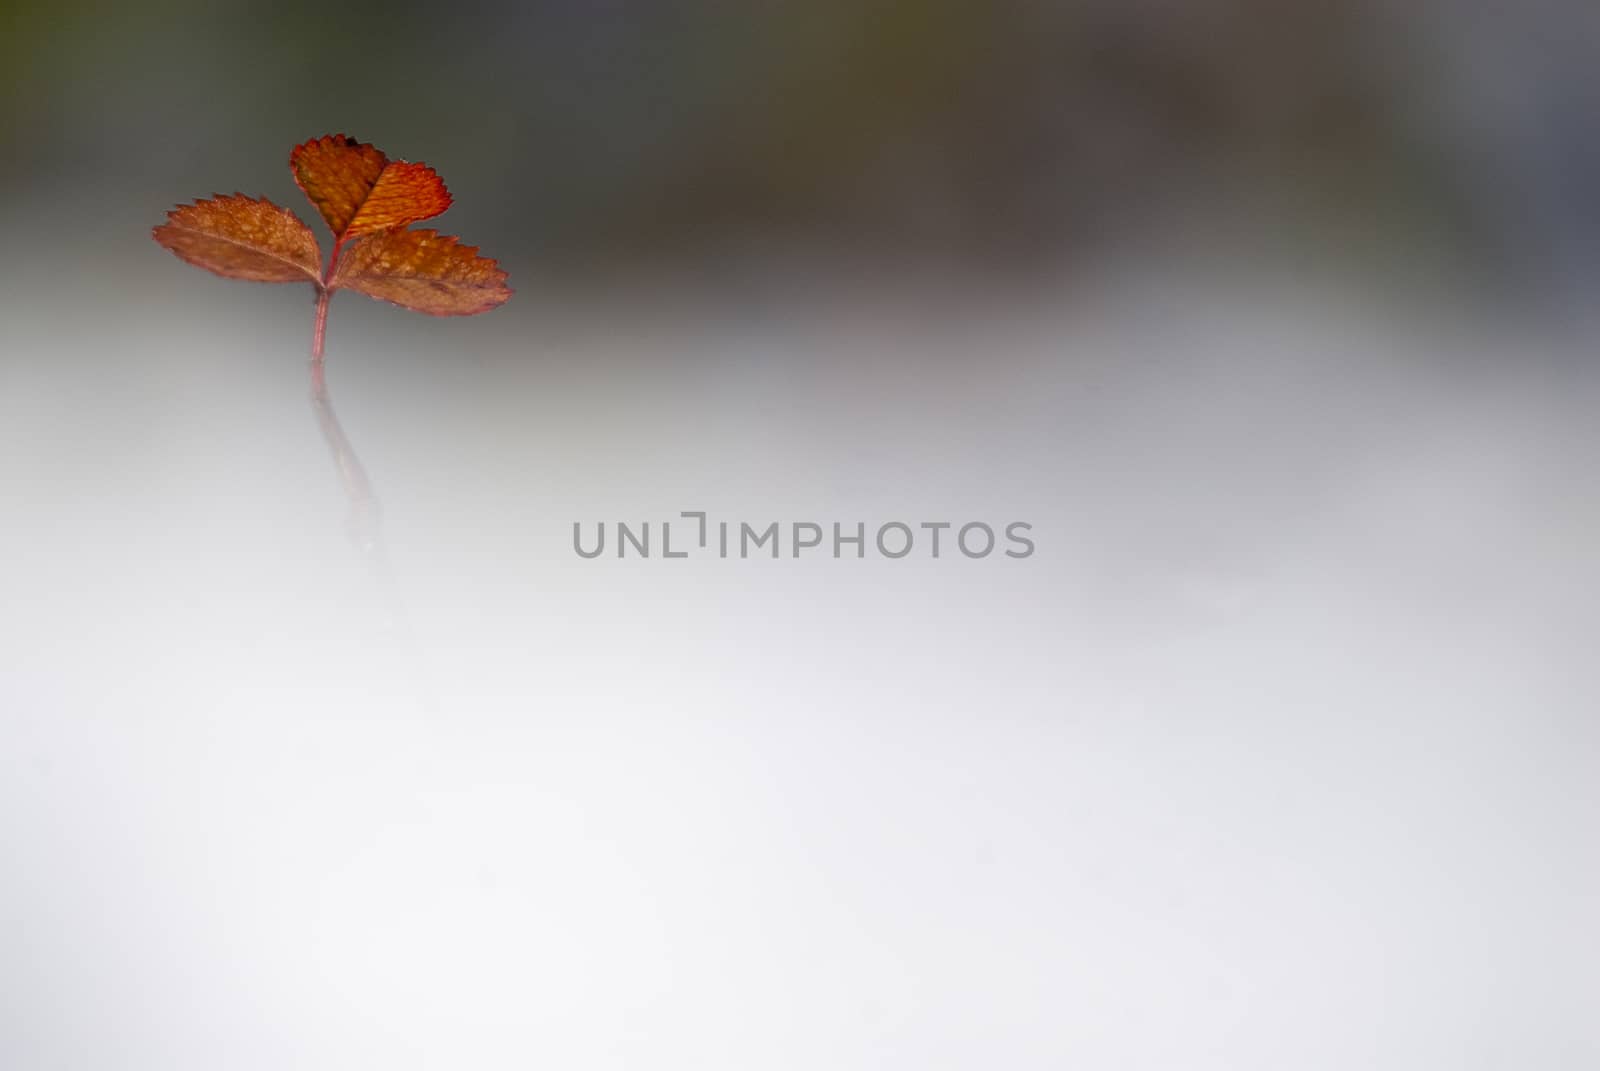 Leaf among the fog, autumn colors by jalonsohu@gmail.com